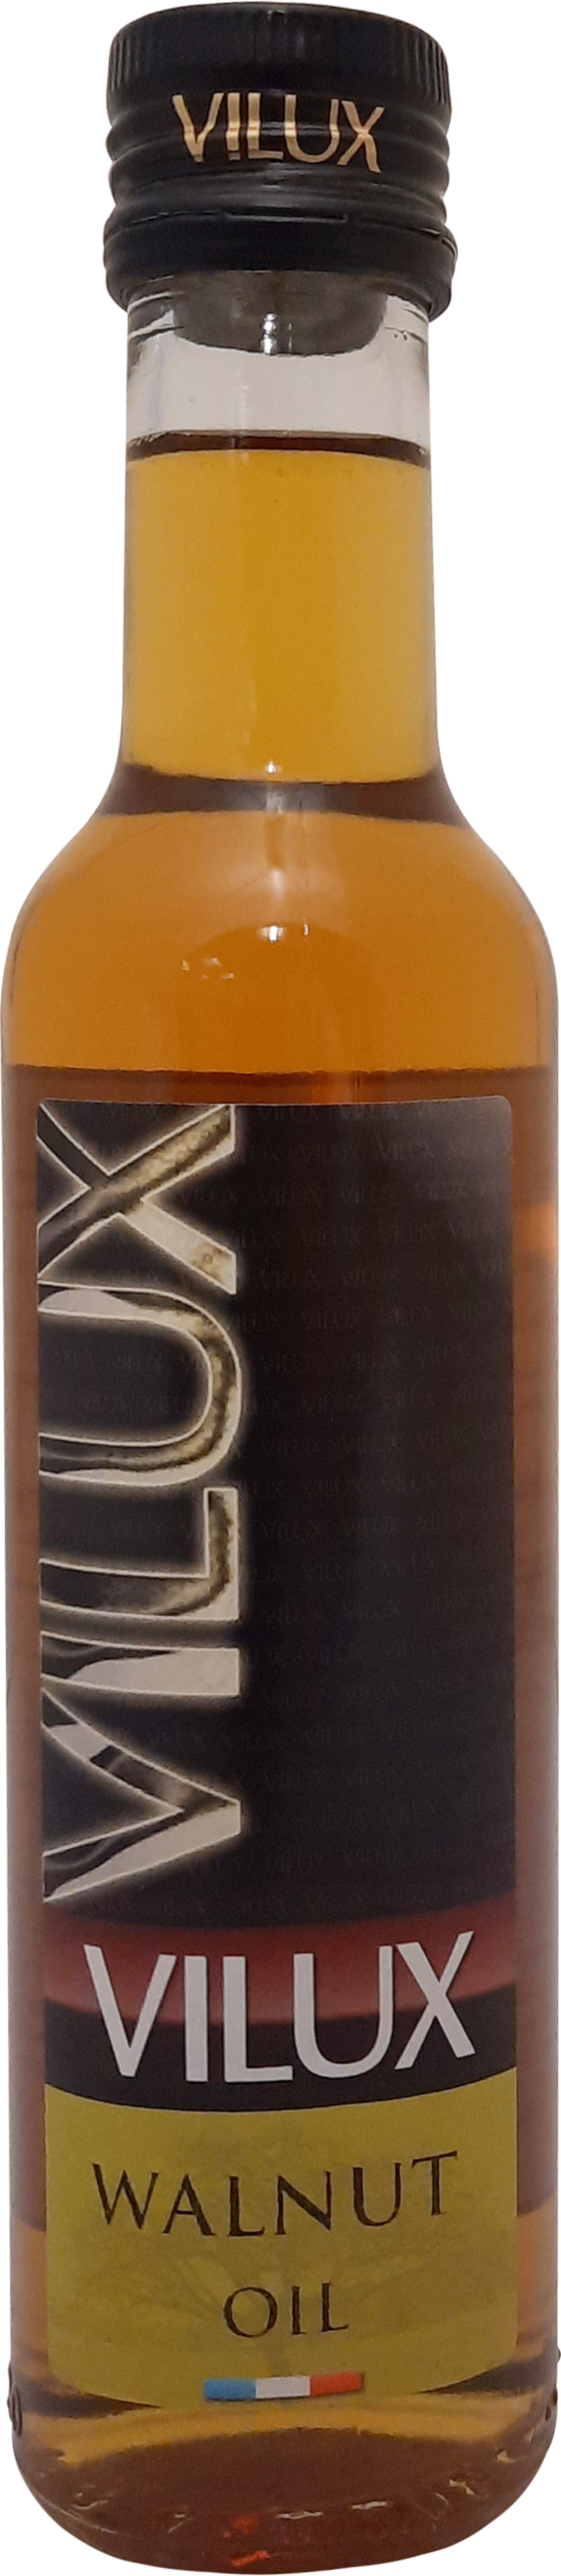 VILUX Walnut Oil 25cl